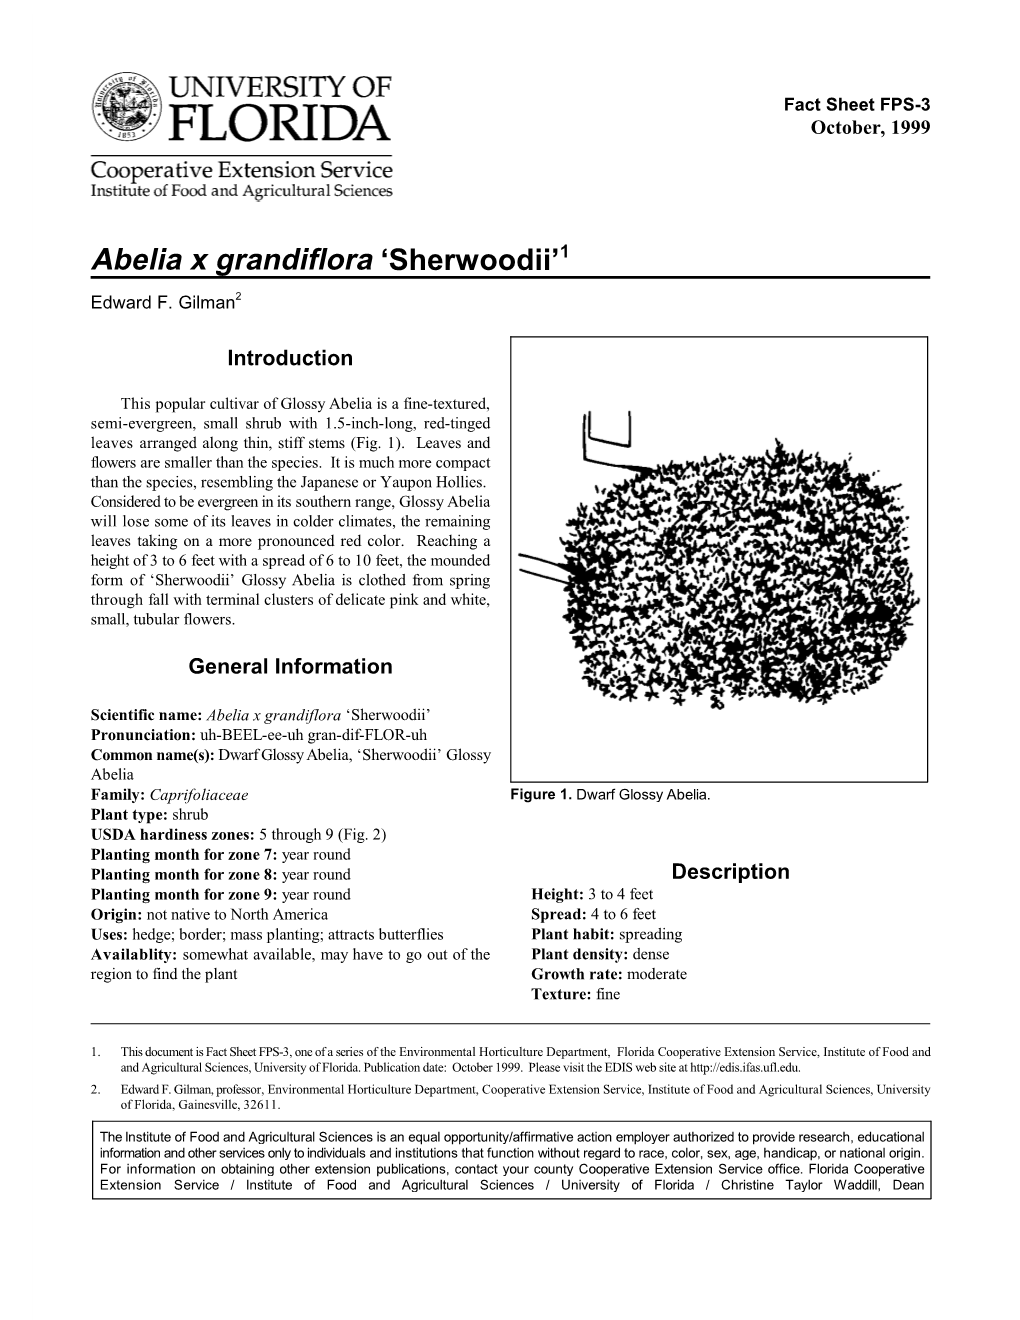 Abelia X Grandiflora 'Sherwoodii'1